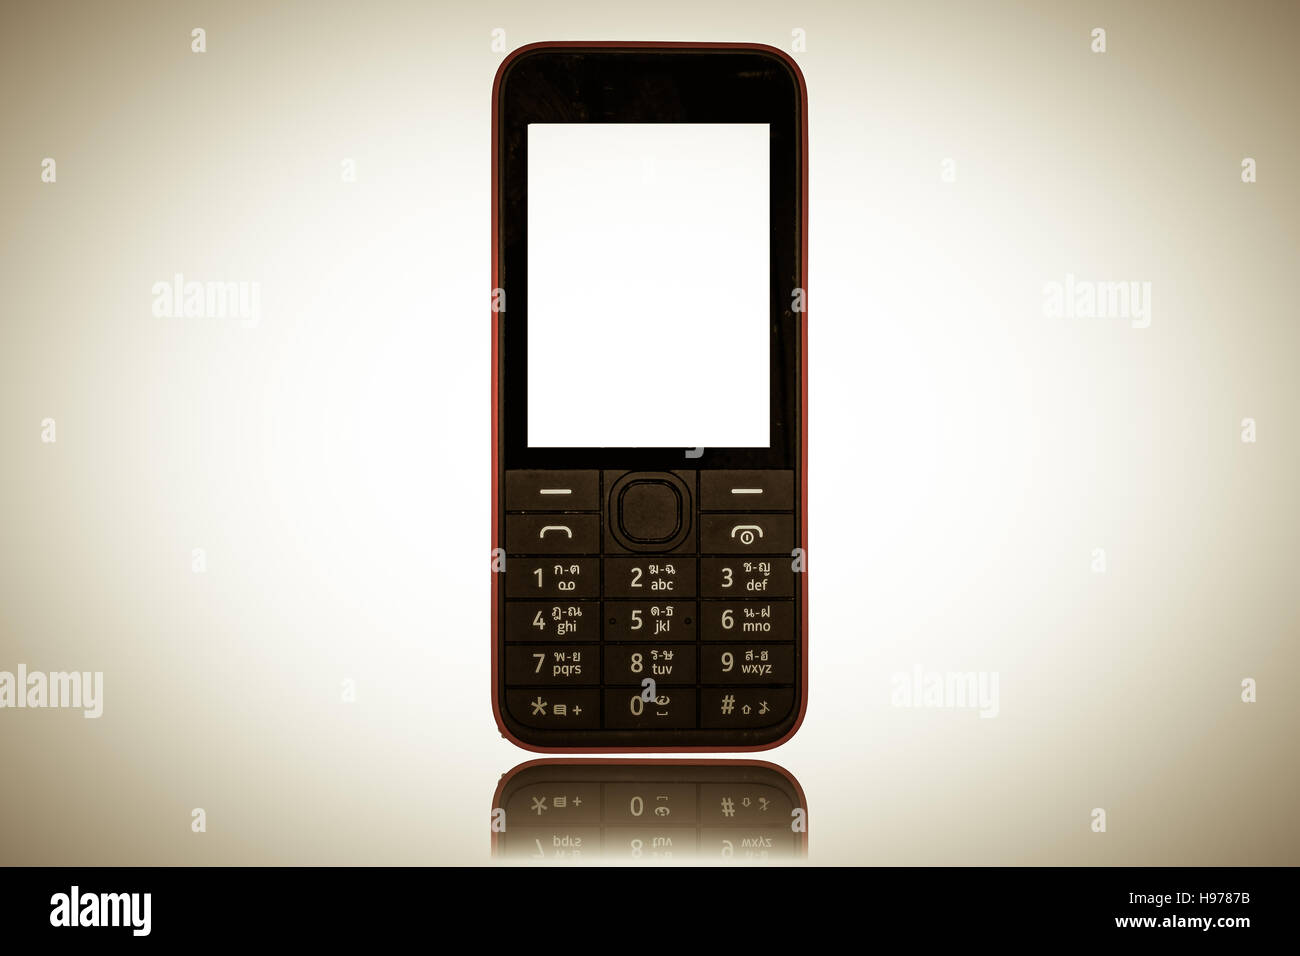 Mobile Phone old fashion style isolated on white background. Stock Photo